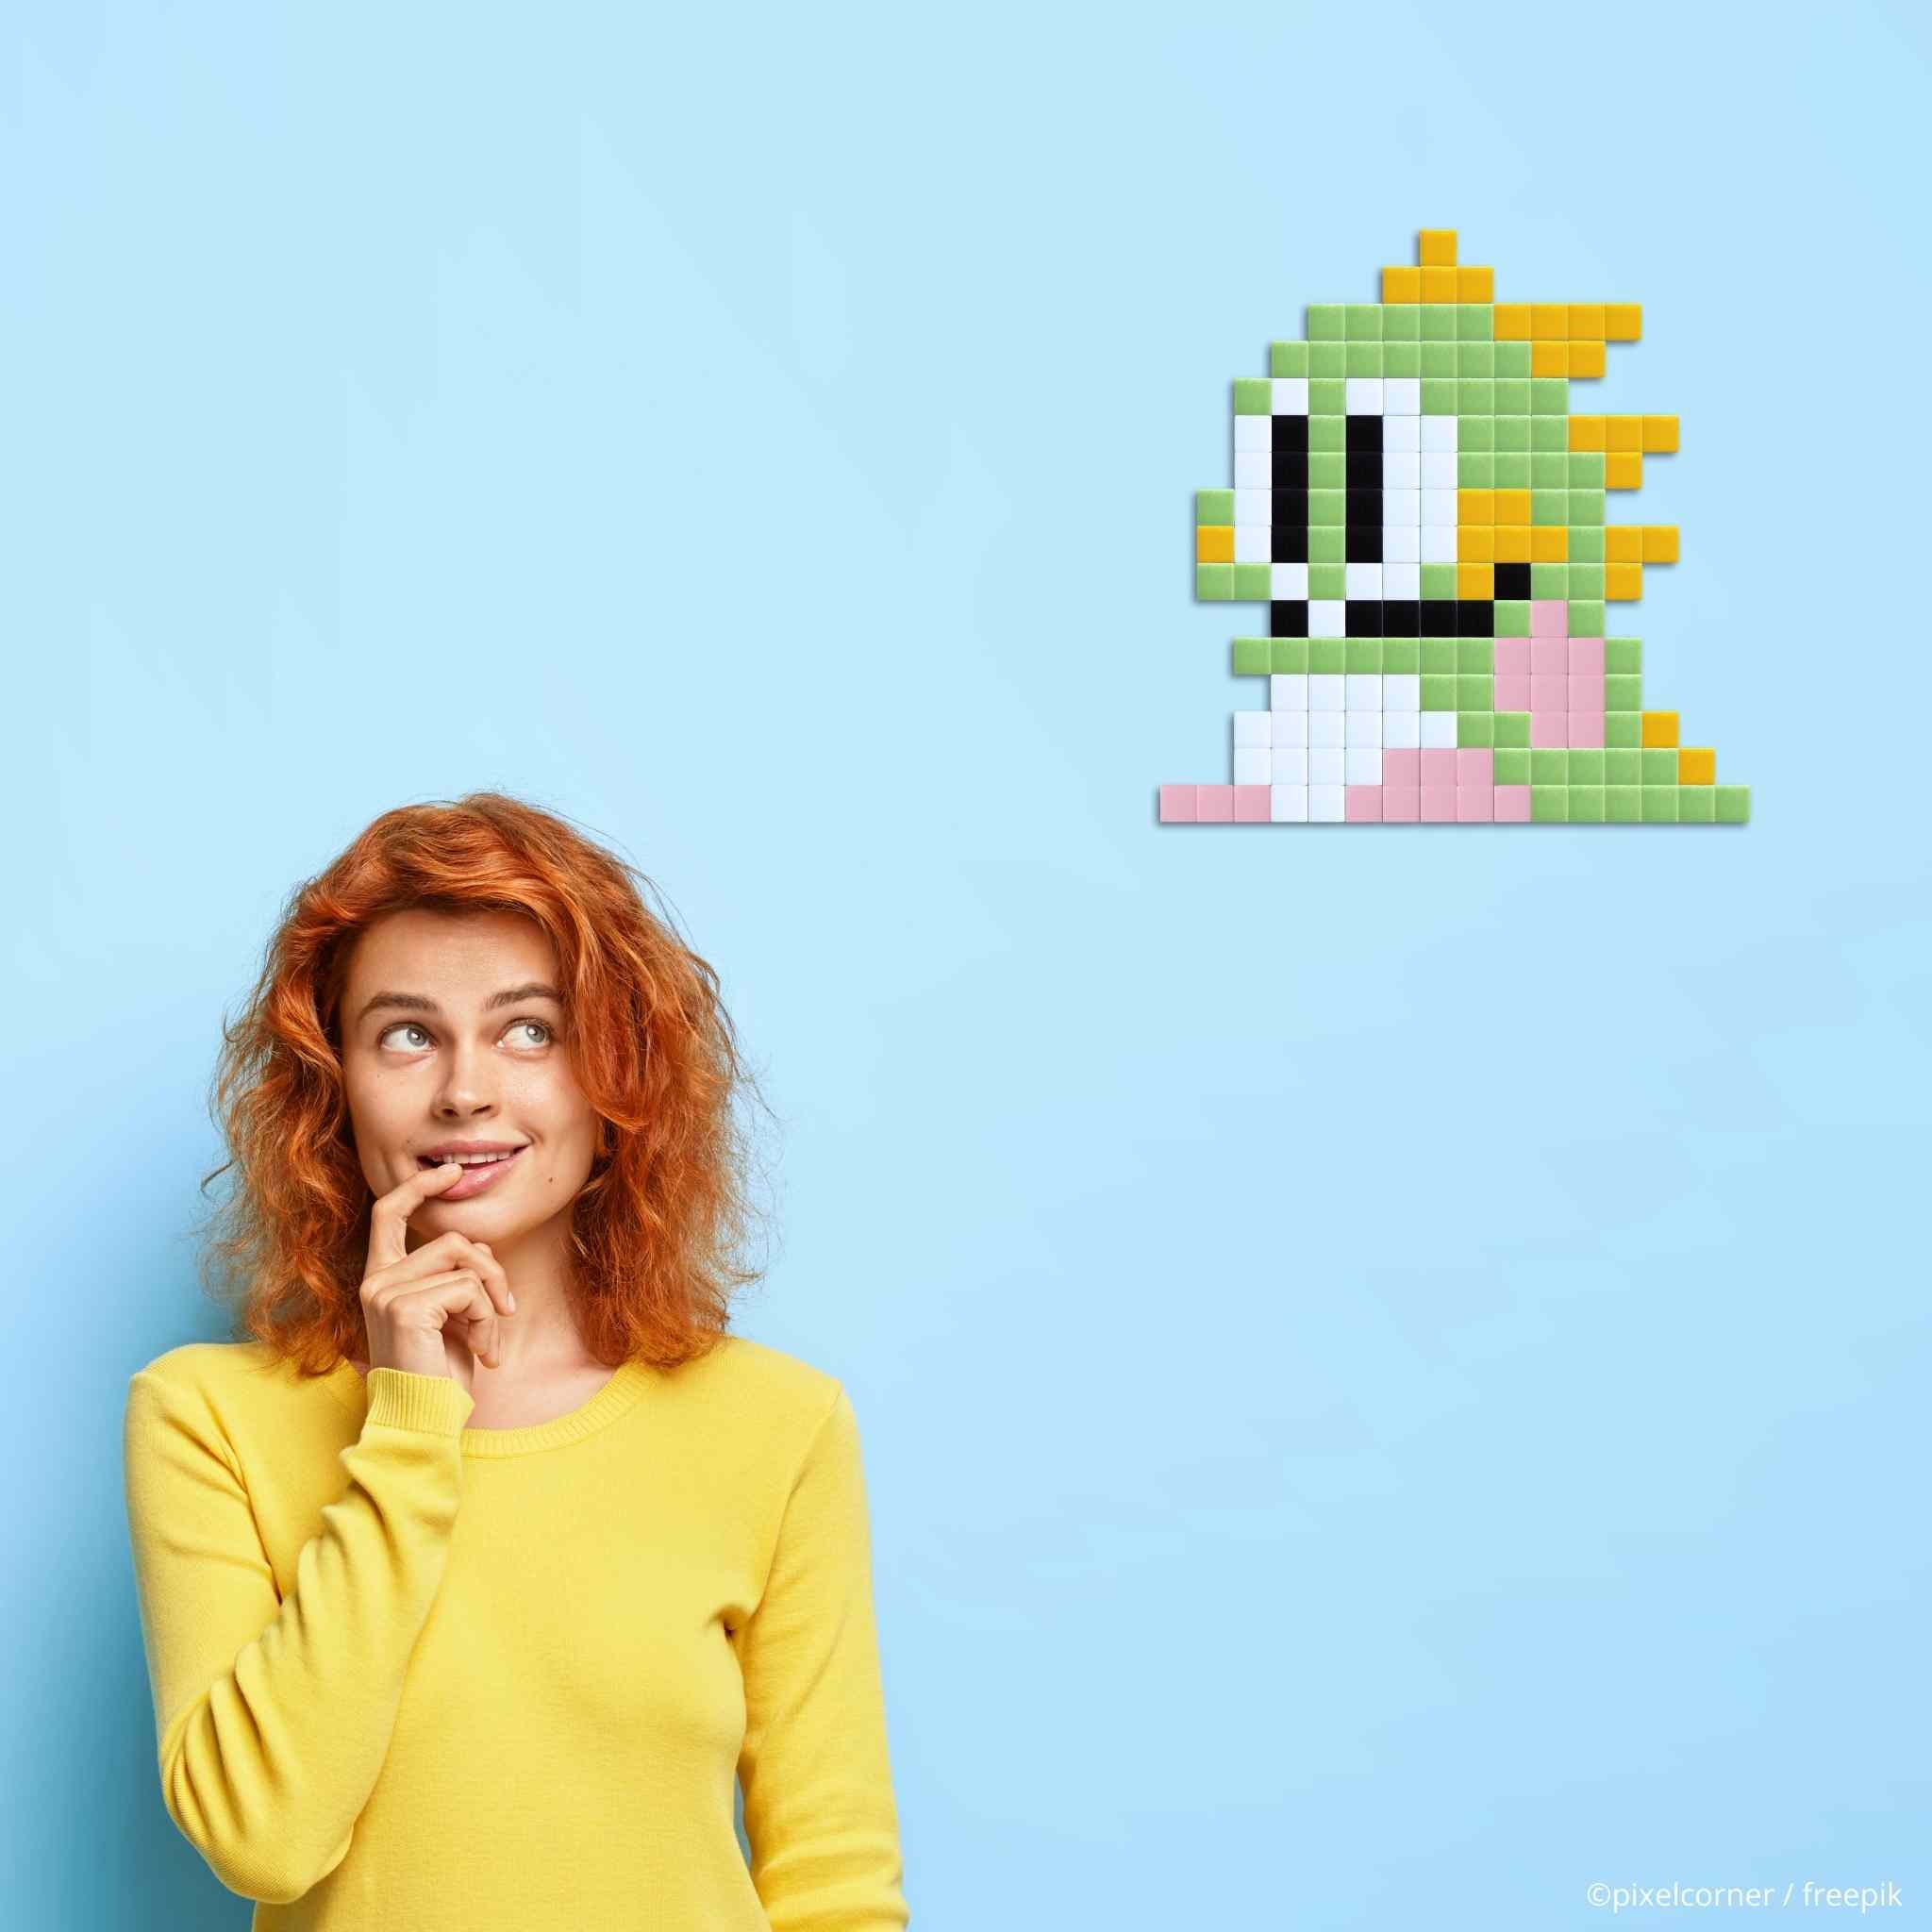 Pixel Art Kit "Kawaii Bubble" par Pixel Corner - Kits de loisirs créatifs